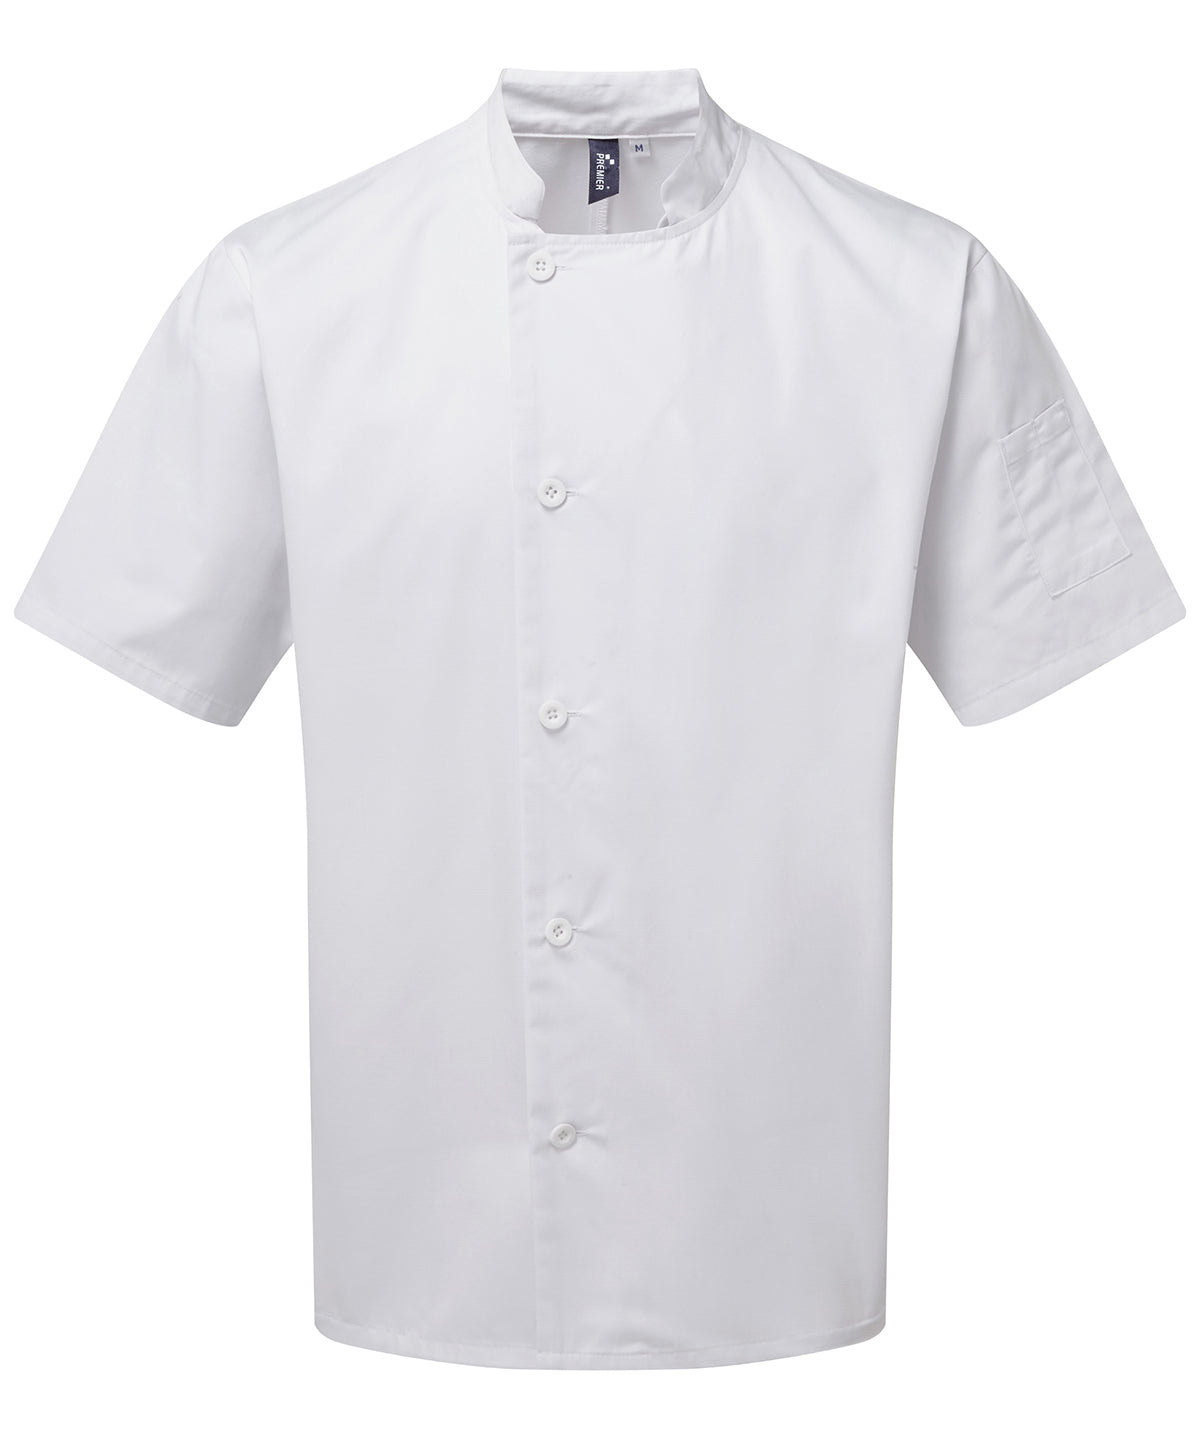 Premier Chef's essential short sleeve jacket